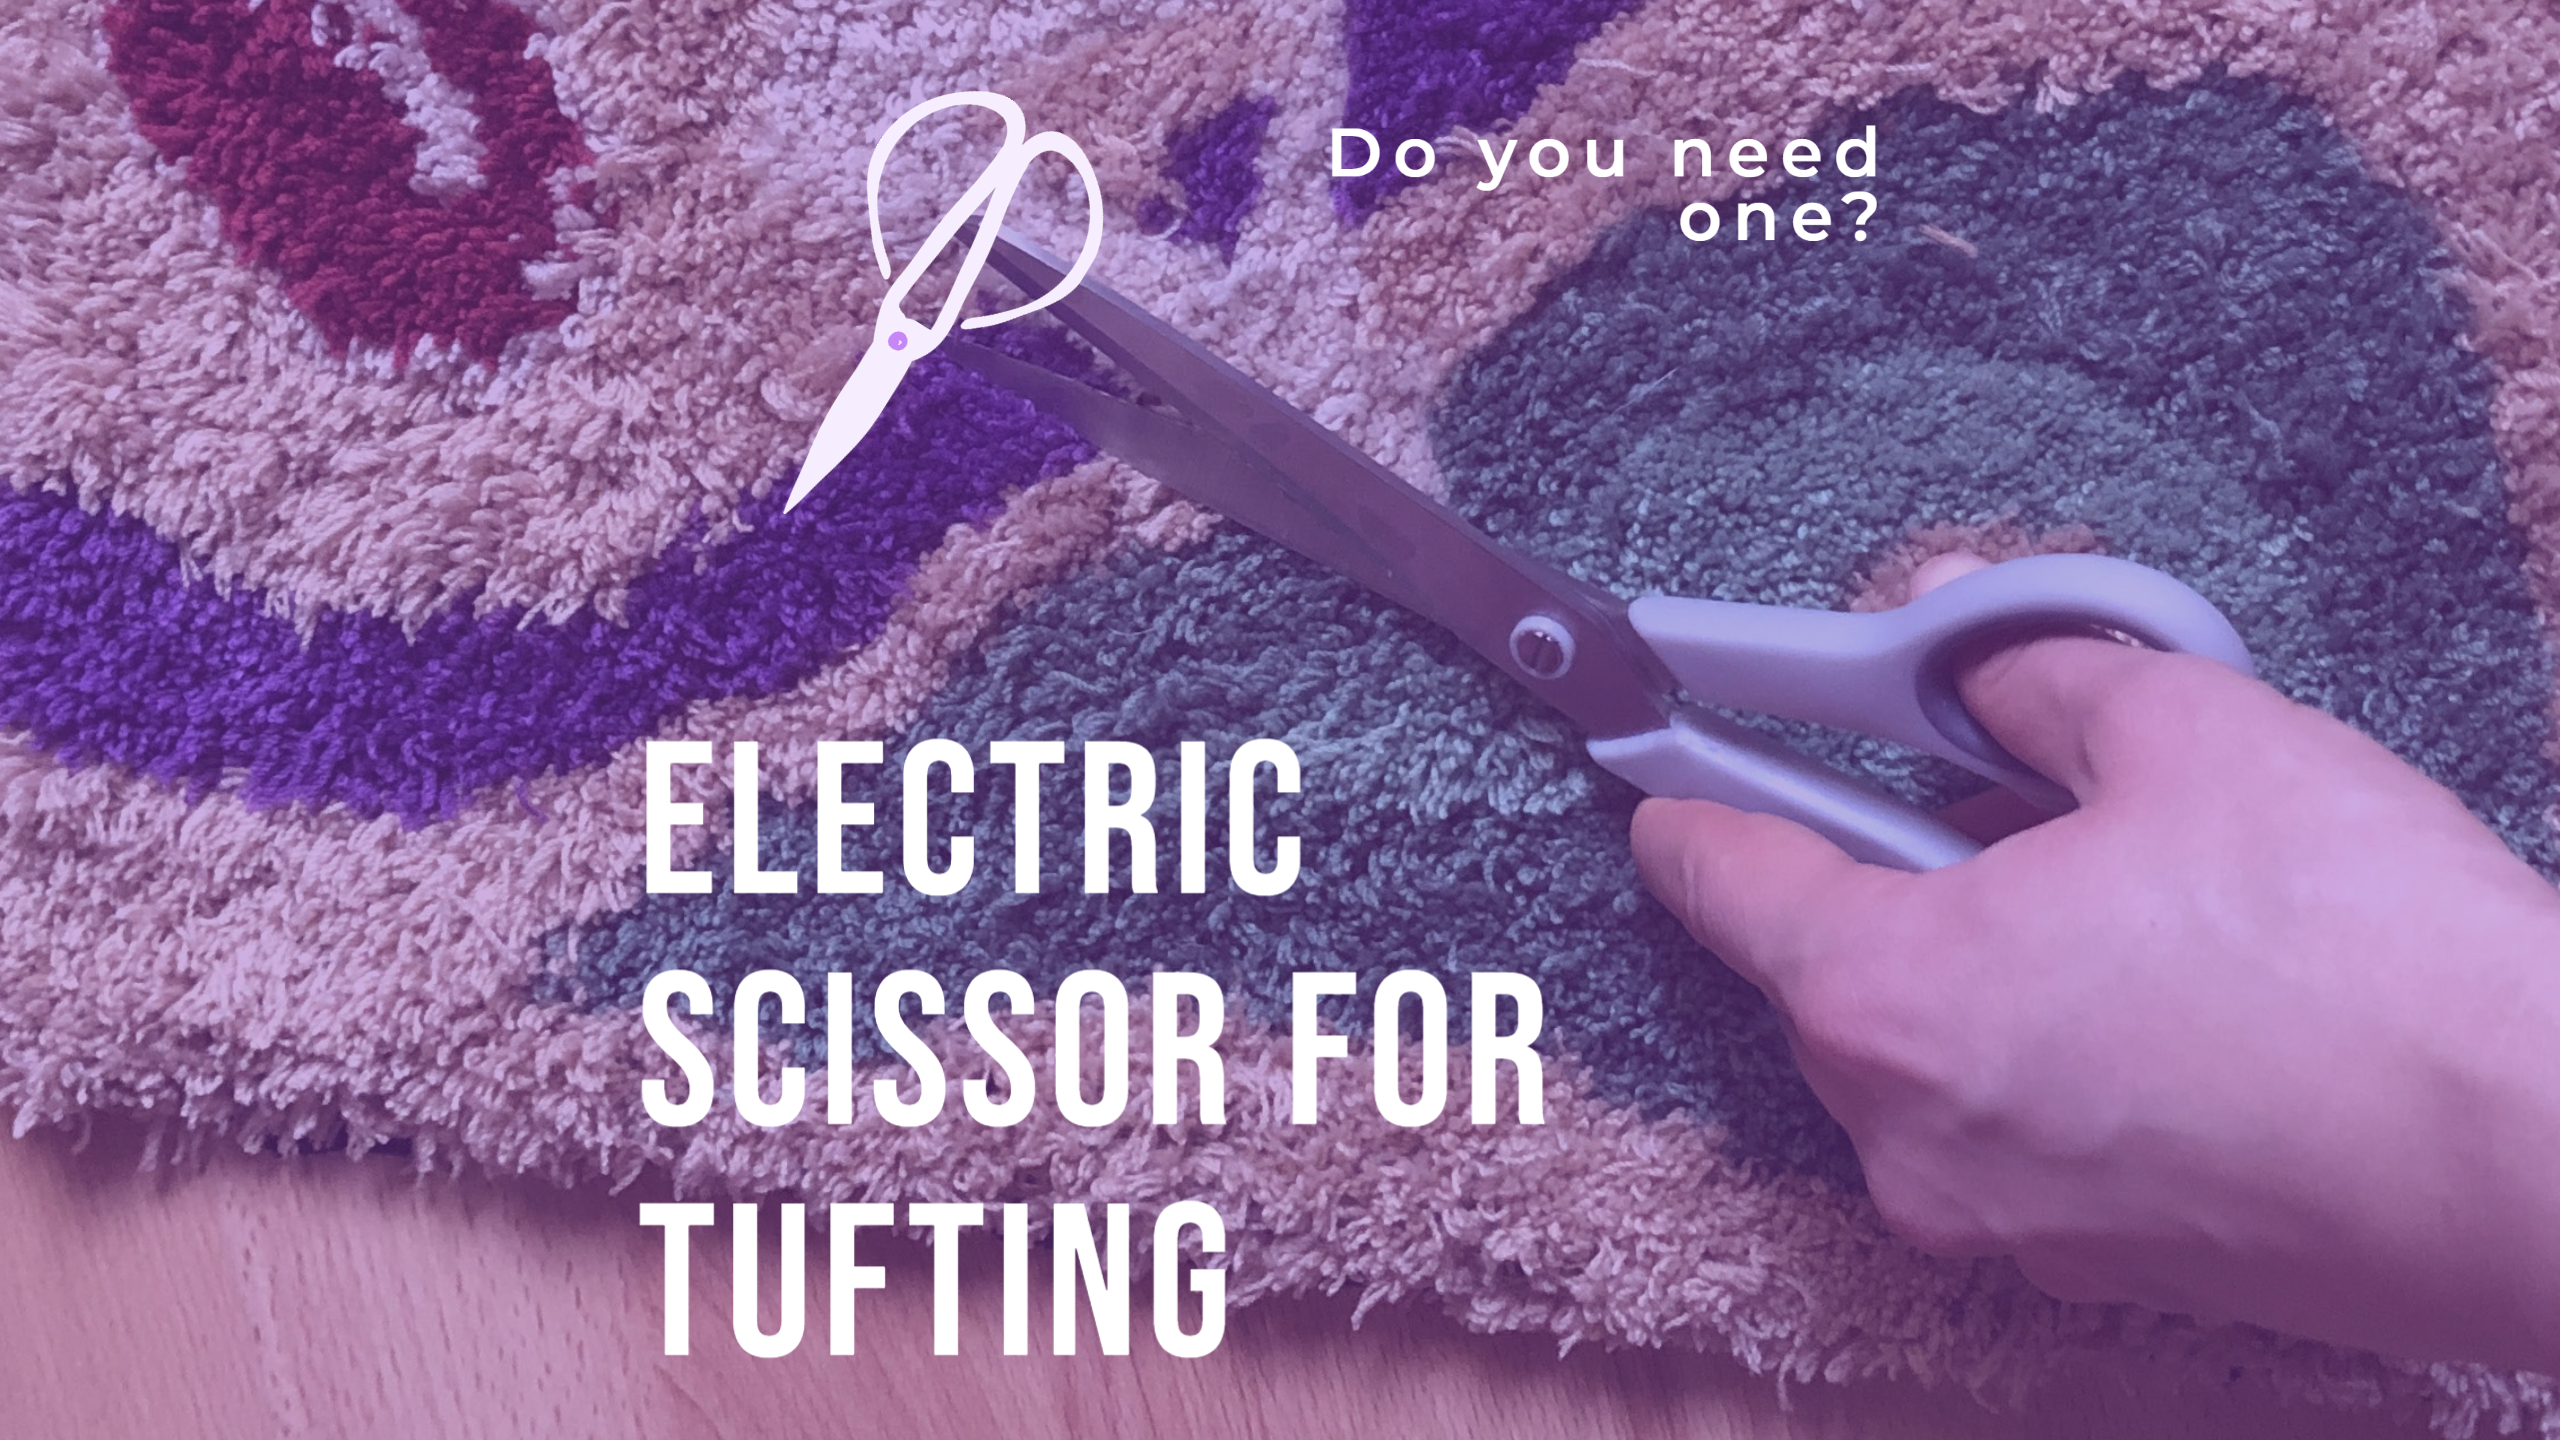 Electric scissor for tufting, do you need one? Scissor on a rug